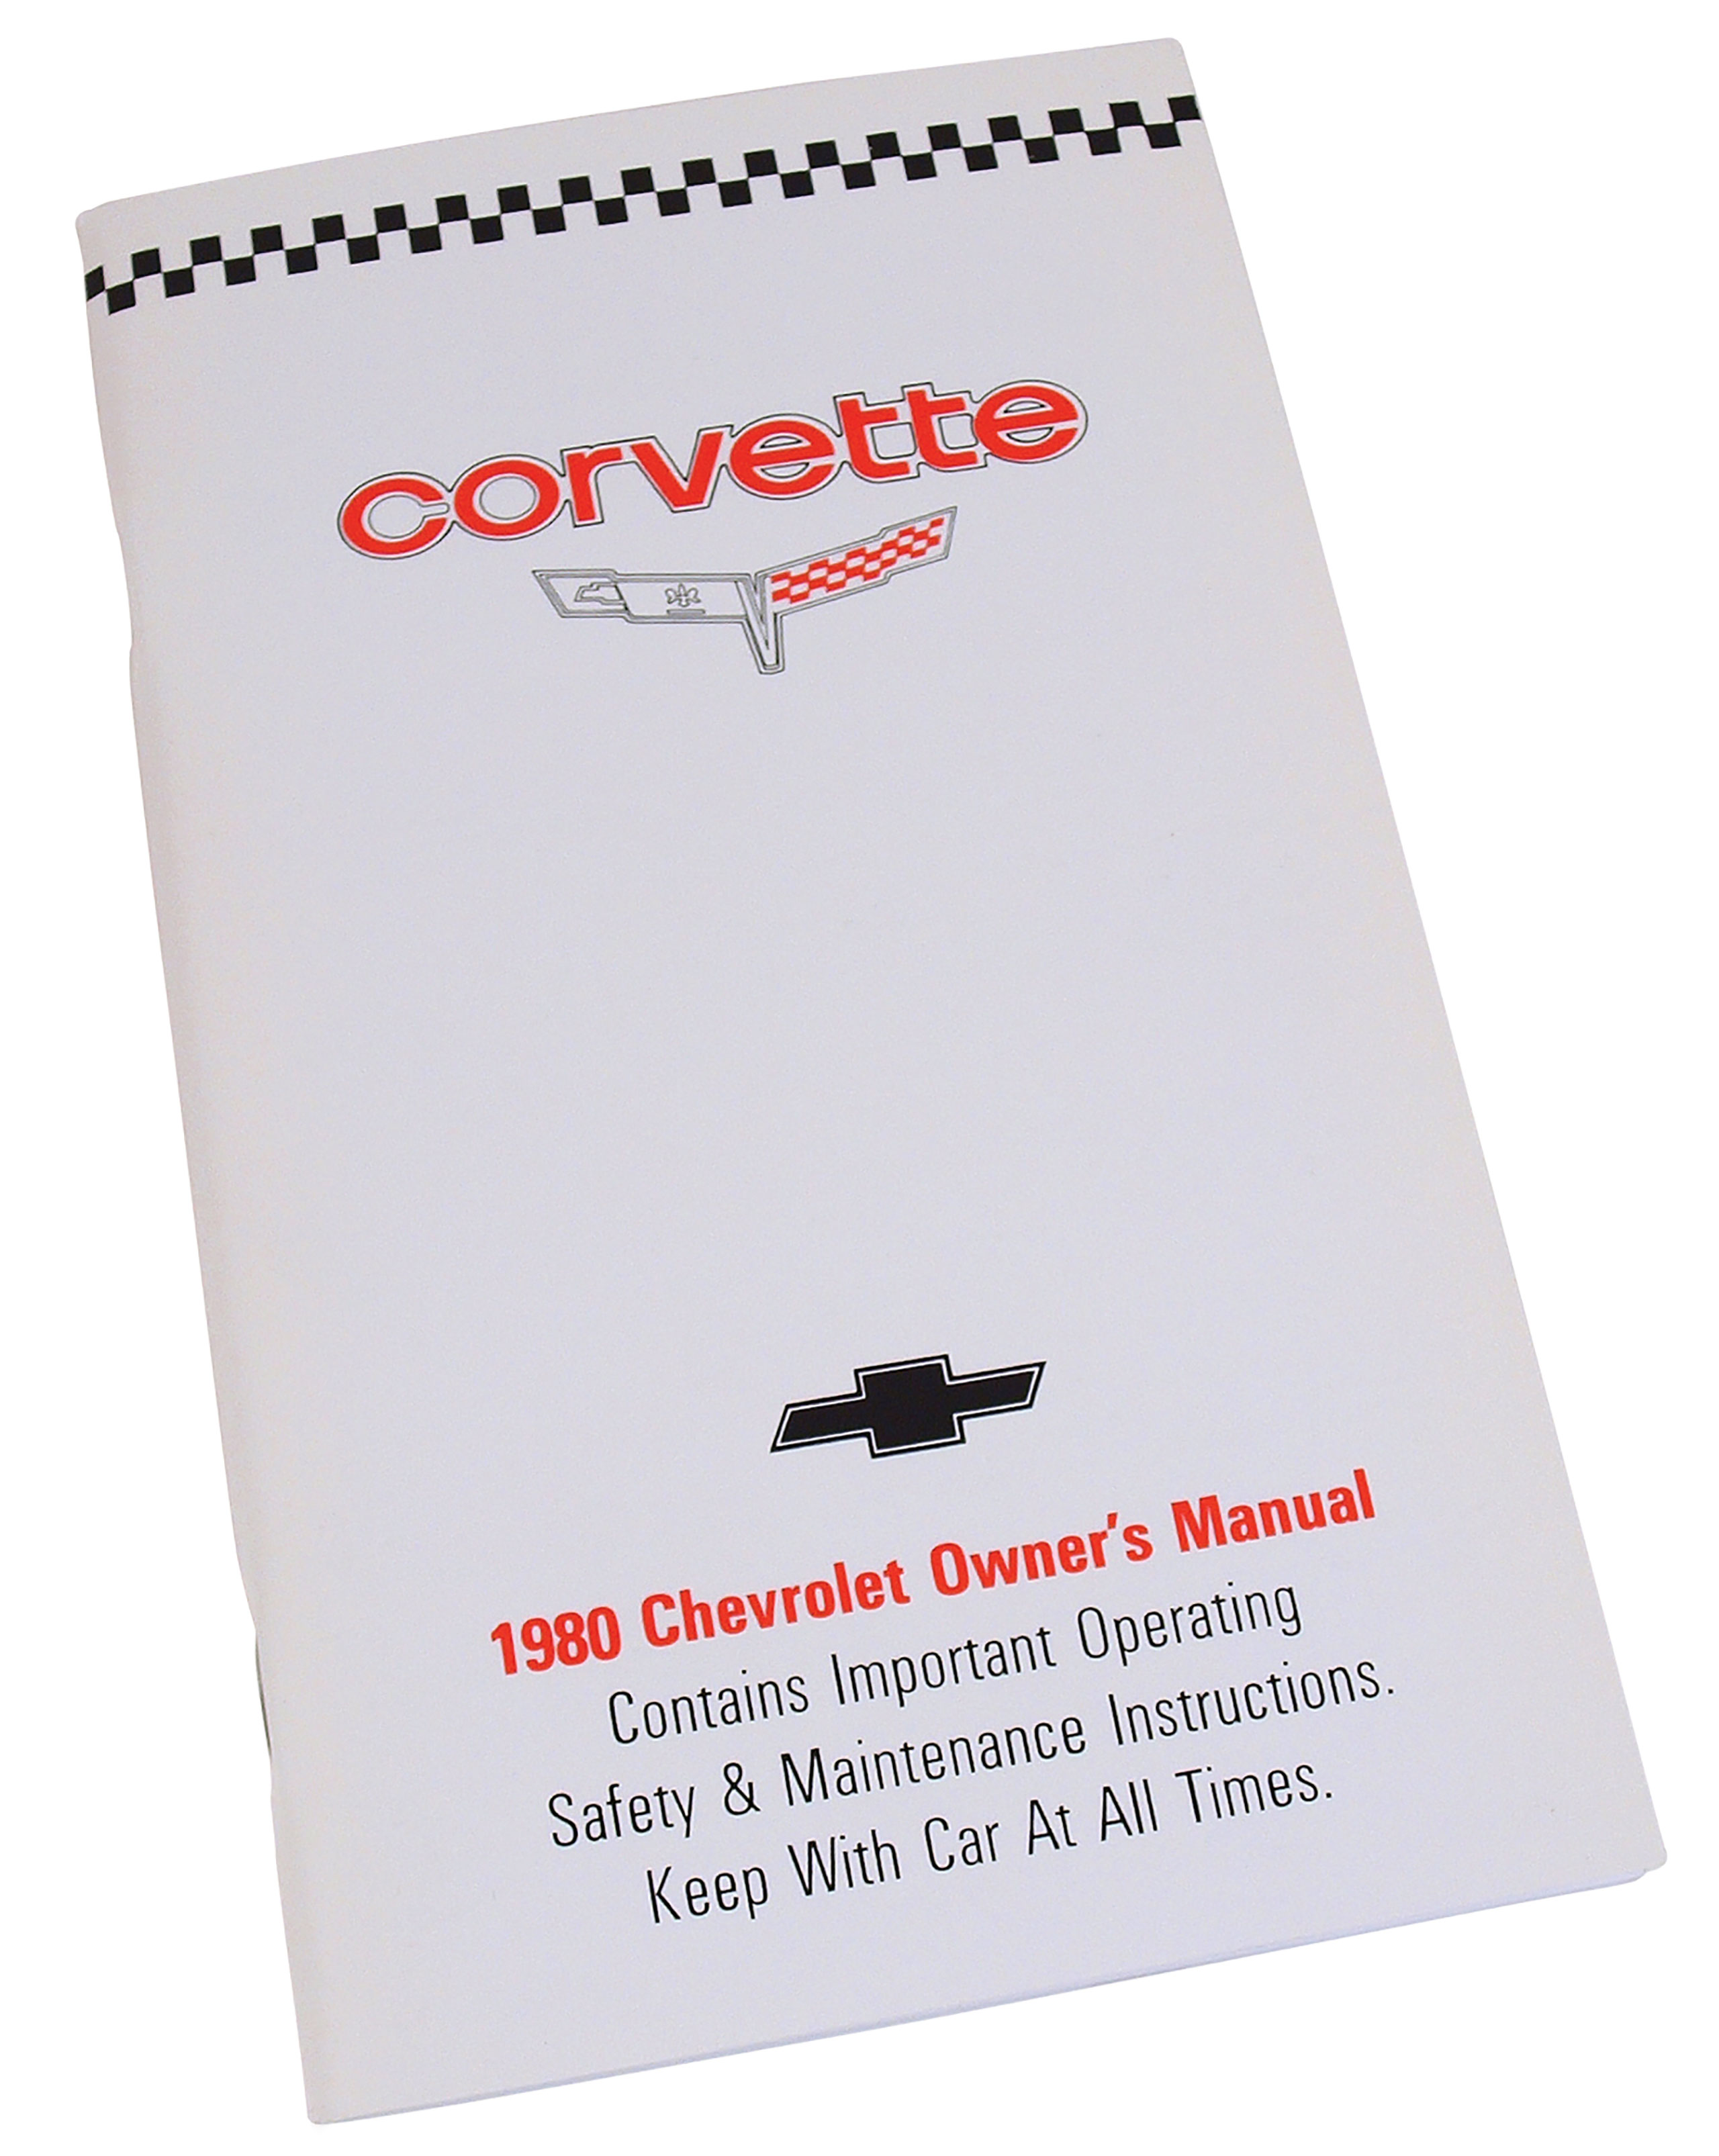 C3 1980 Chevrolet Corvette Owners Manual. Corvette - Auto Accessories of America